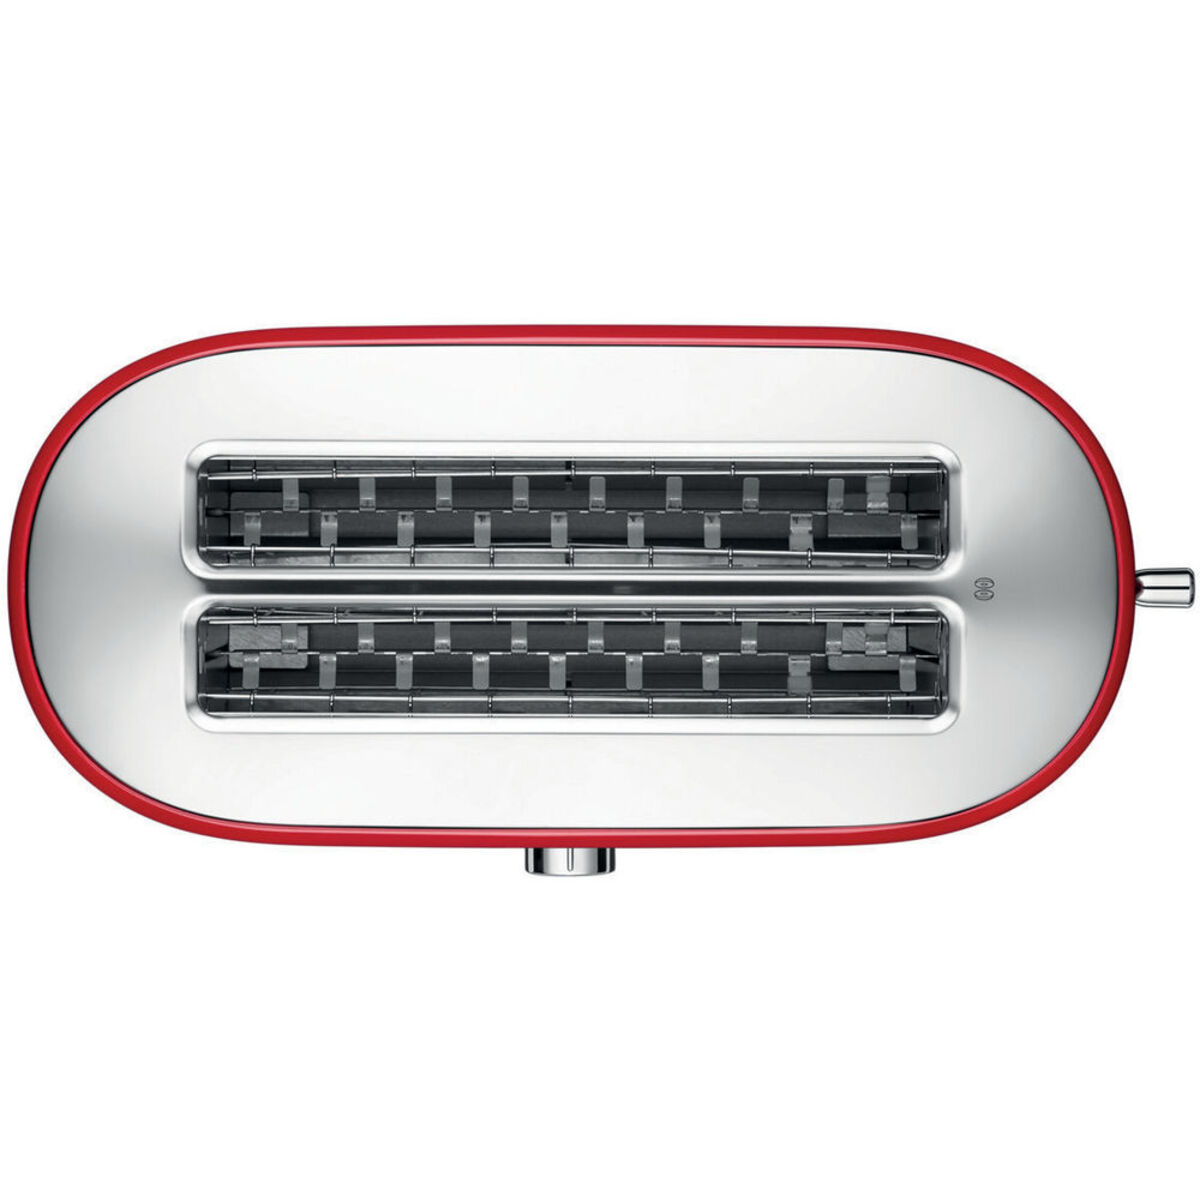 KitchenAid 5KMT4116BER Manual Control Long 4 Slot Toaster, Empire Red